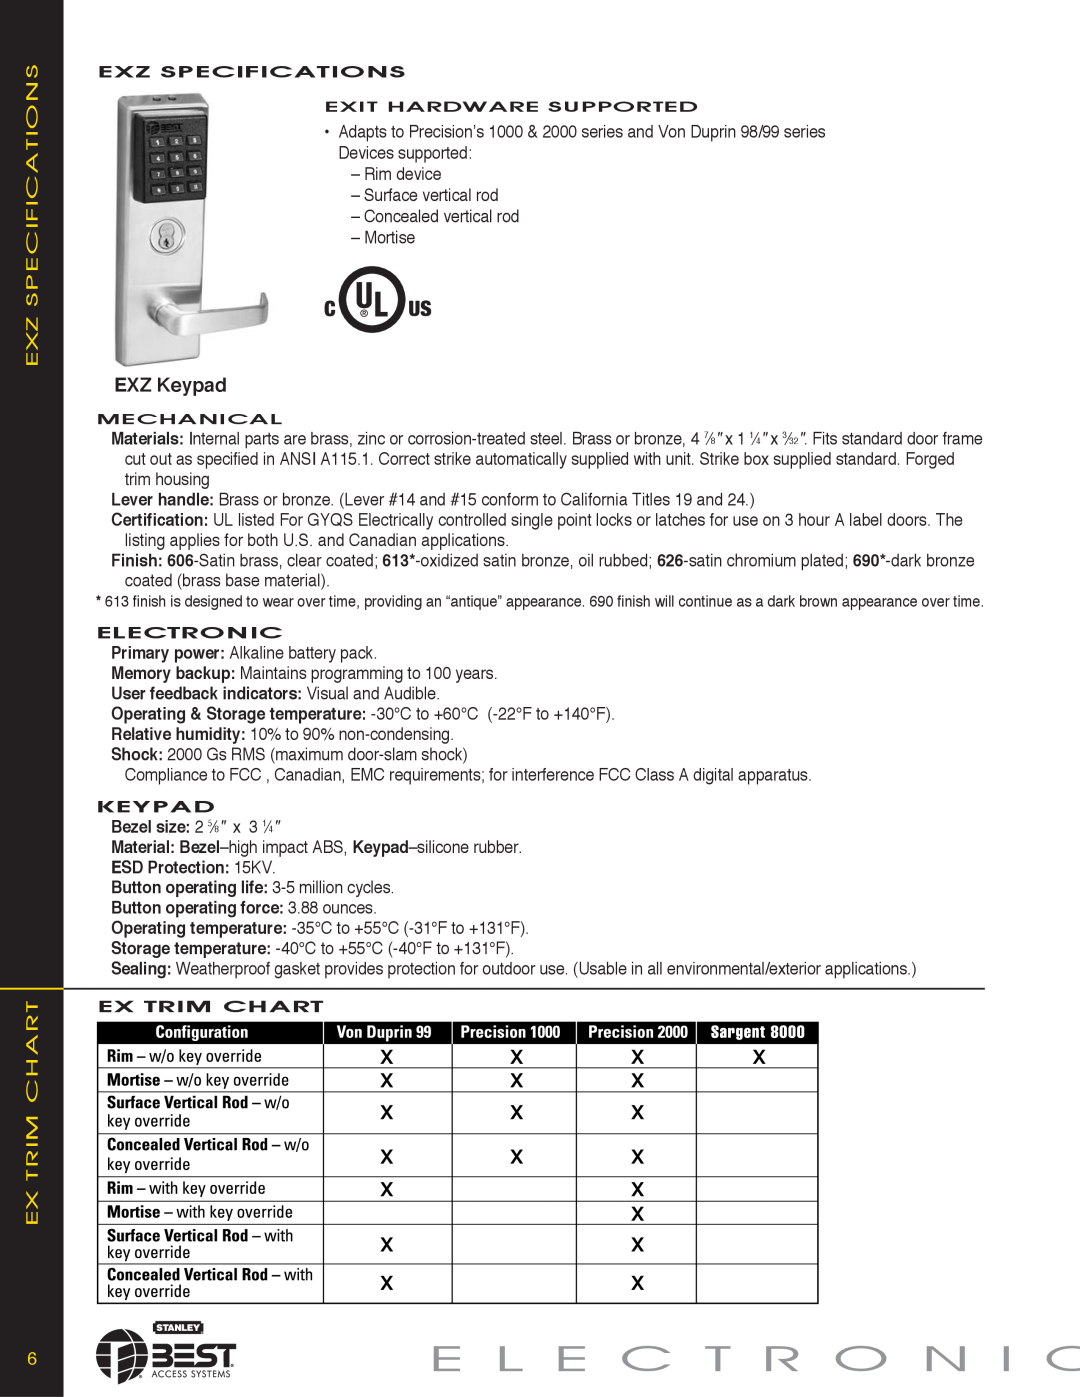 Stanley Black & Decker KEYPAD EZ LOCKS manual Exz Specifications Ex Trim Chart, EXZ Keypad, E L E C T R O N I C 